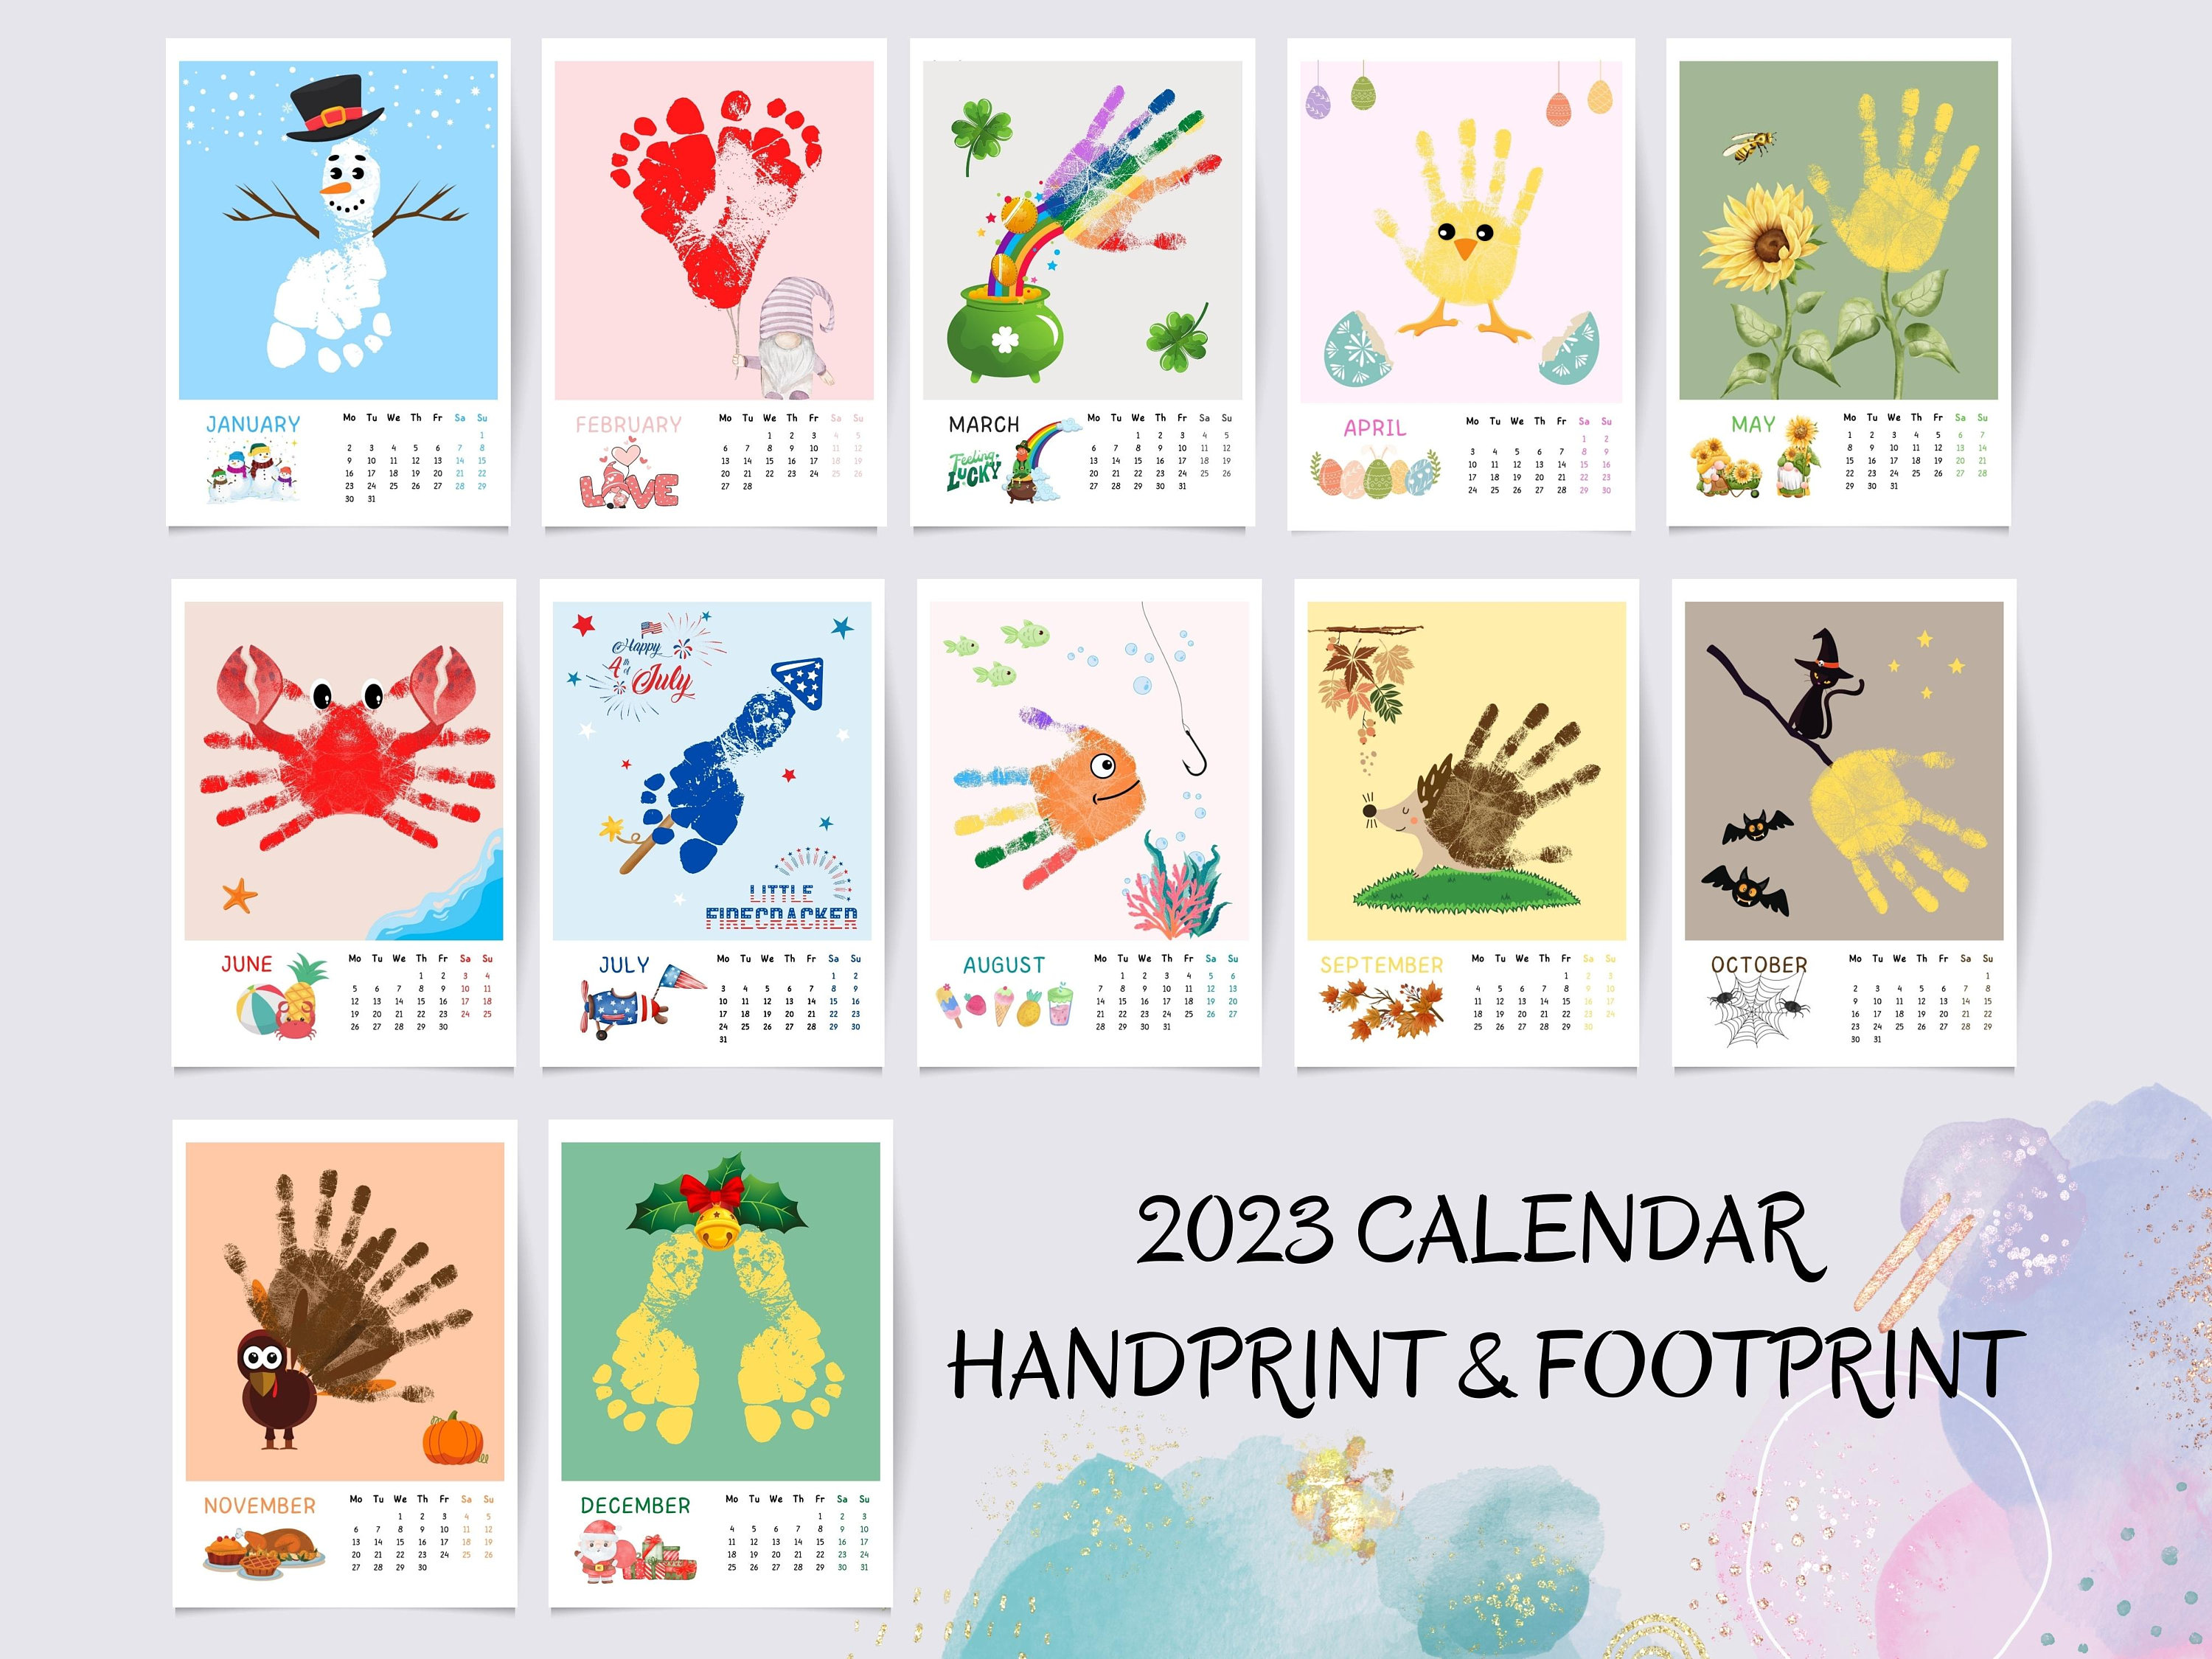 2023-handprint-footprint-calendar-handprint-art-craft-diy-etsy-uk